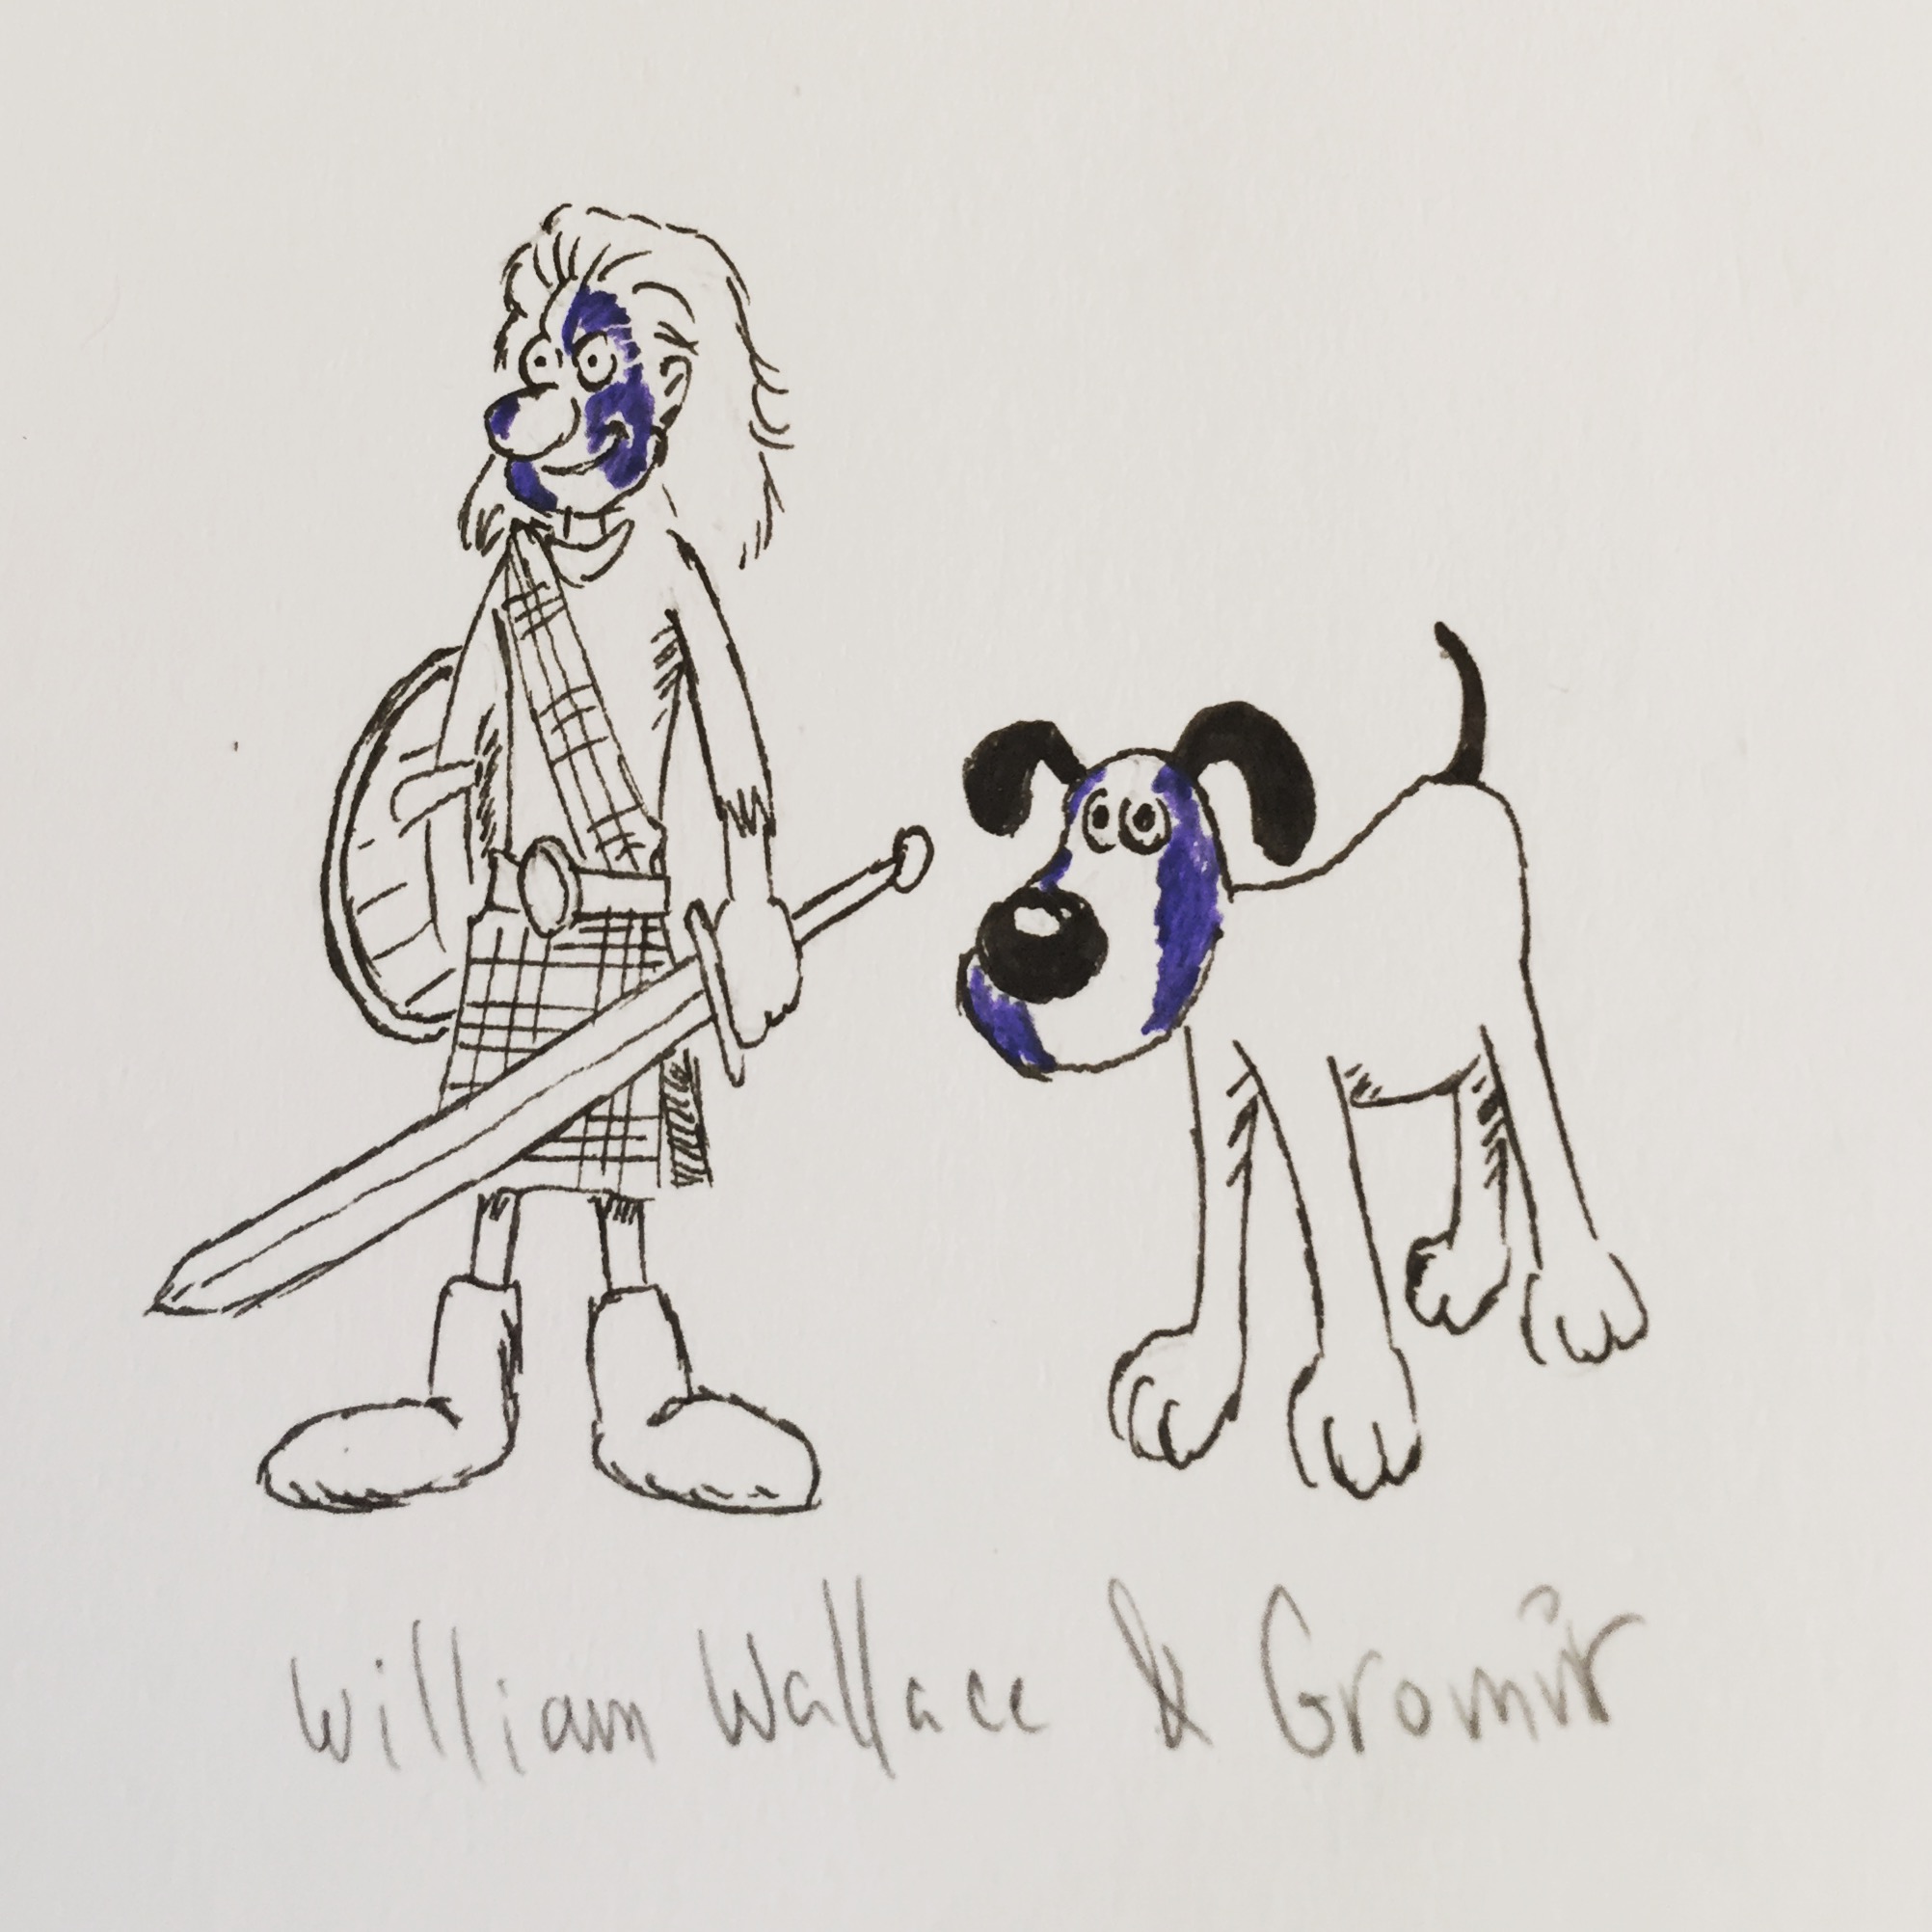 William Wallace & Gromit